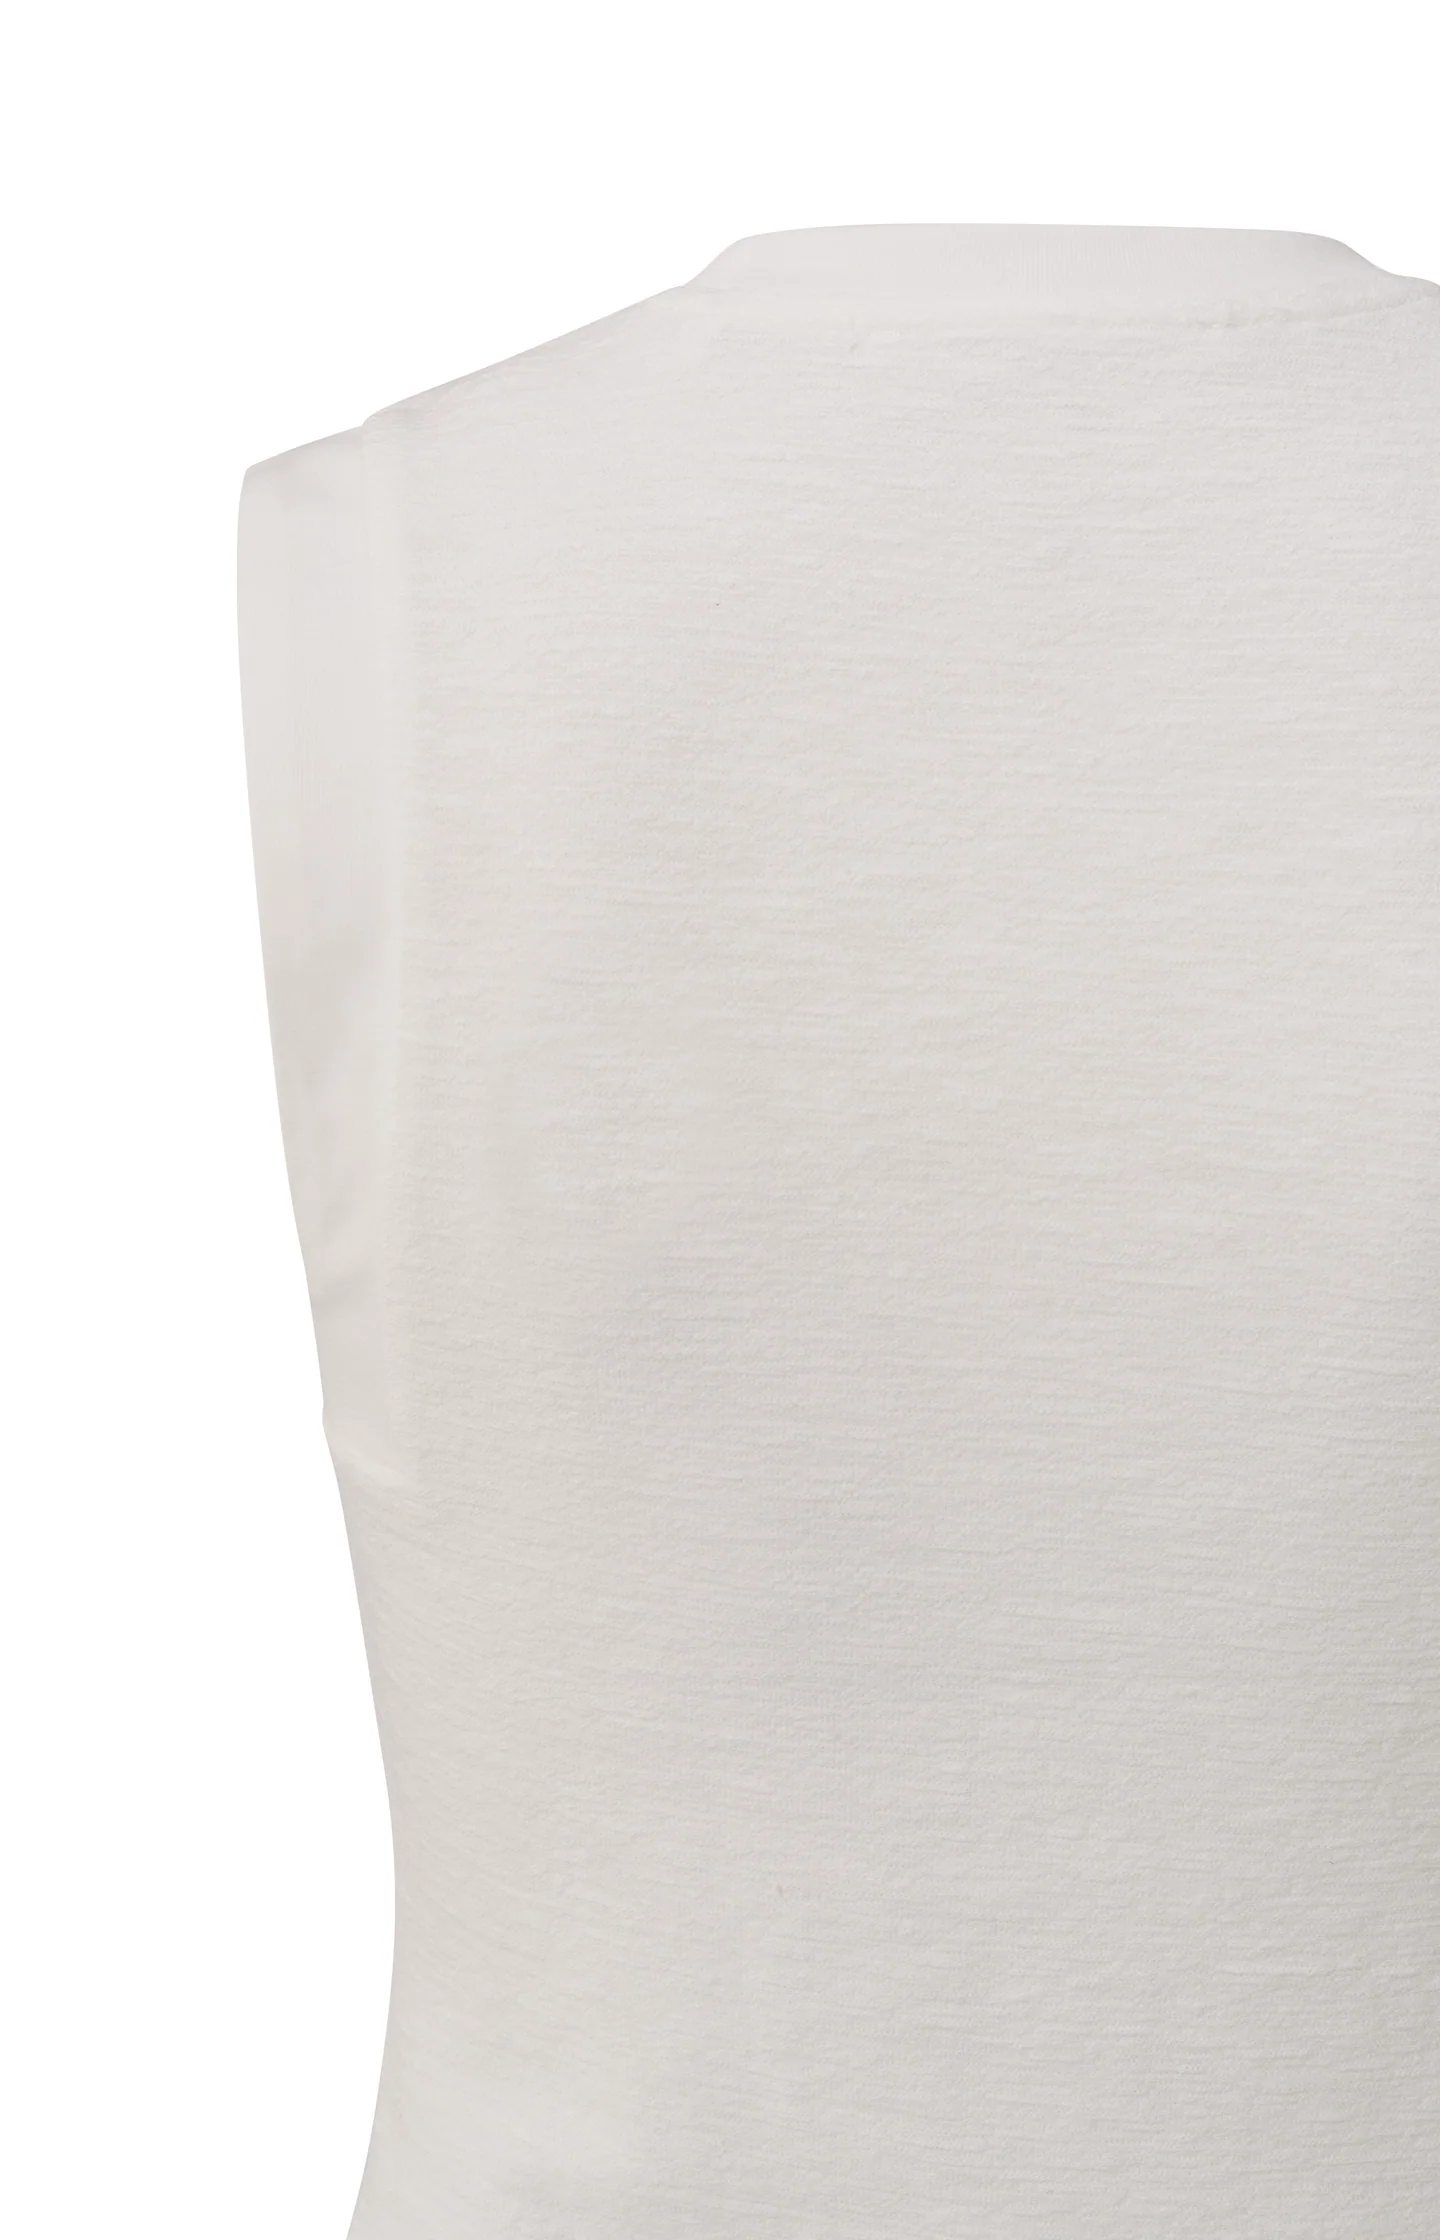 Yaya Singlet - Off-White Clothing - Tops - Shirts - Sleeveless Knits by Yaya | Grace the Boutique